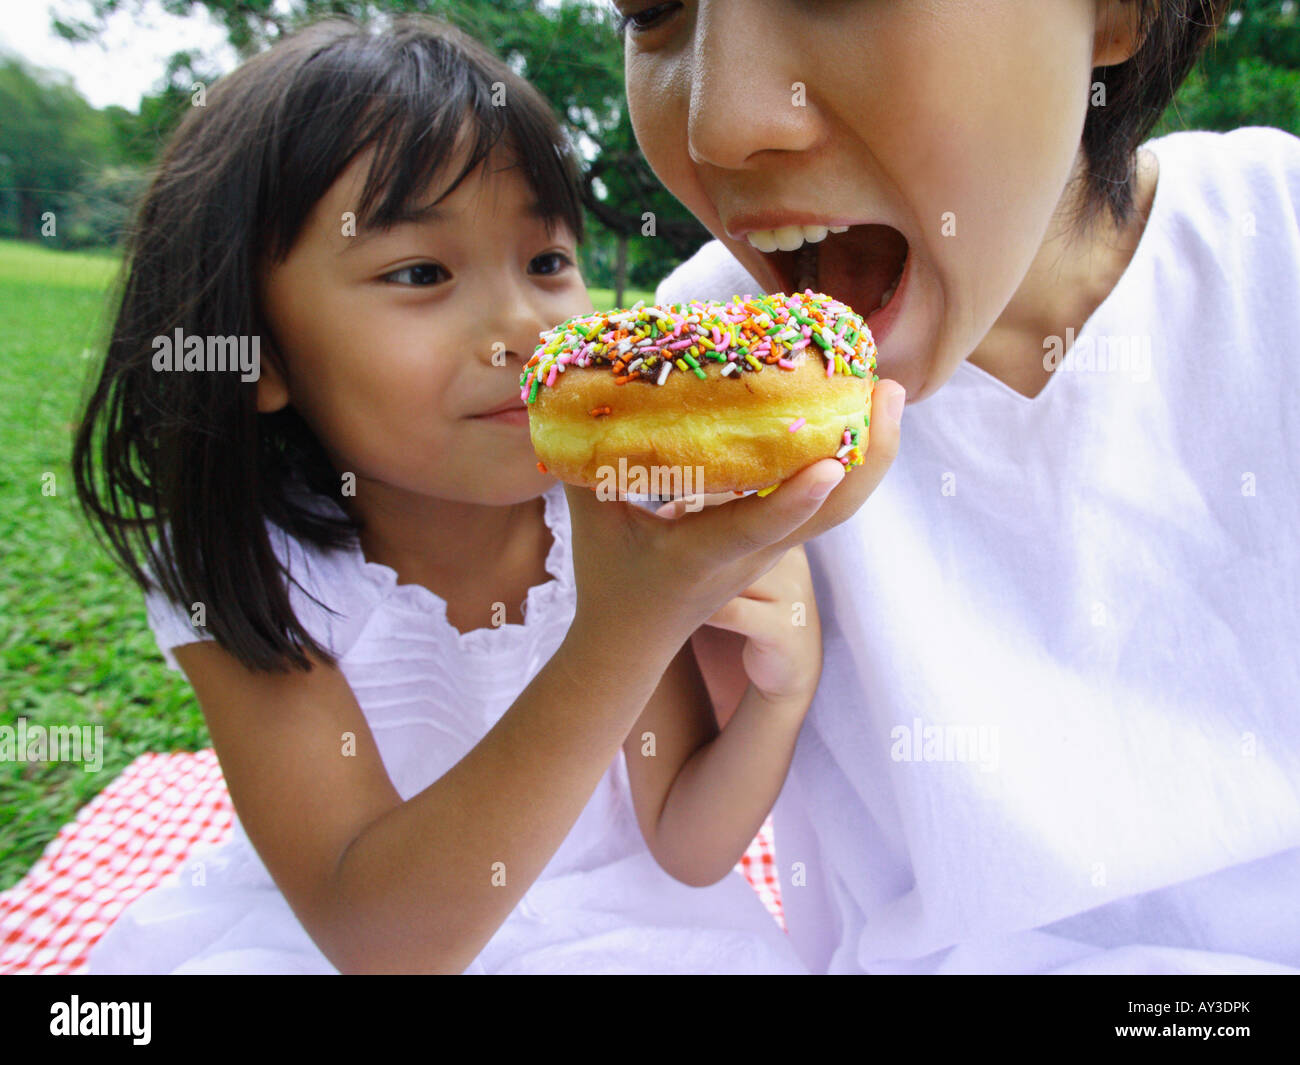 Close-up de una chica alimentando un donut a su madre Foto de stock